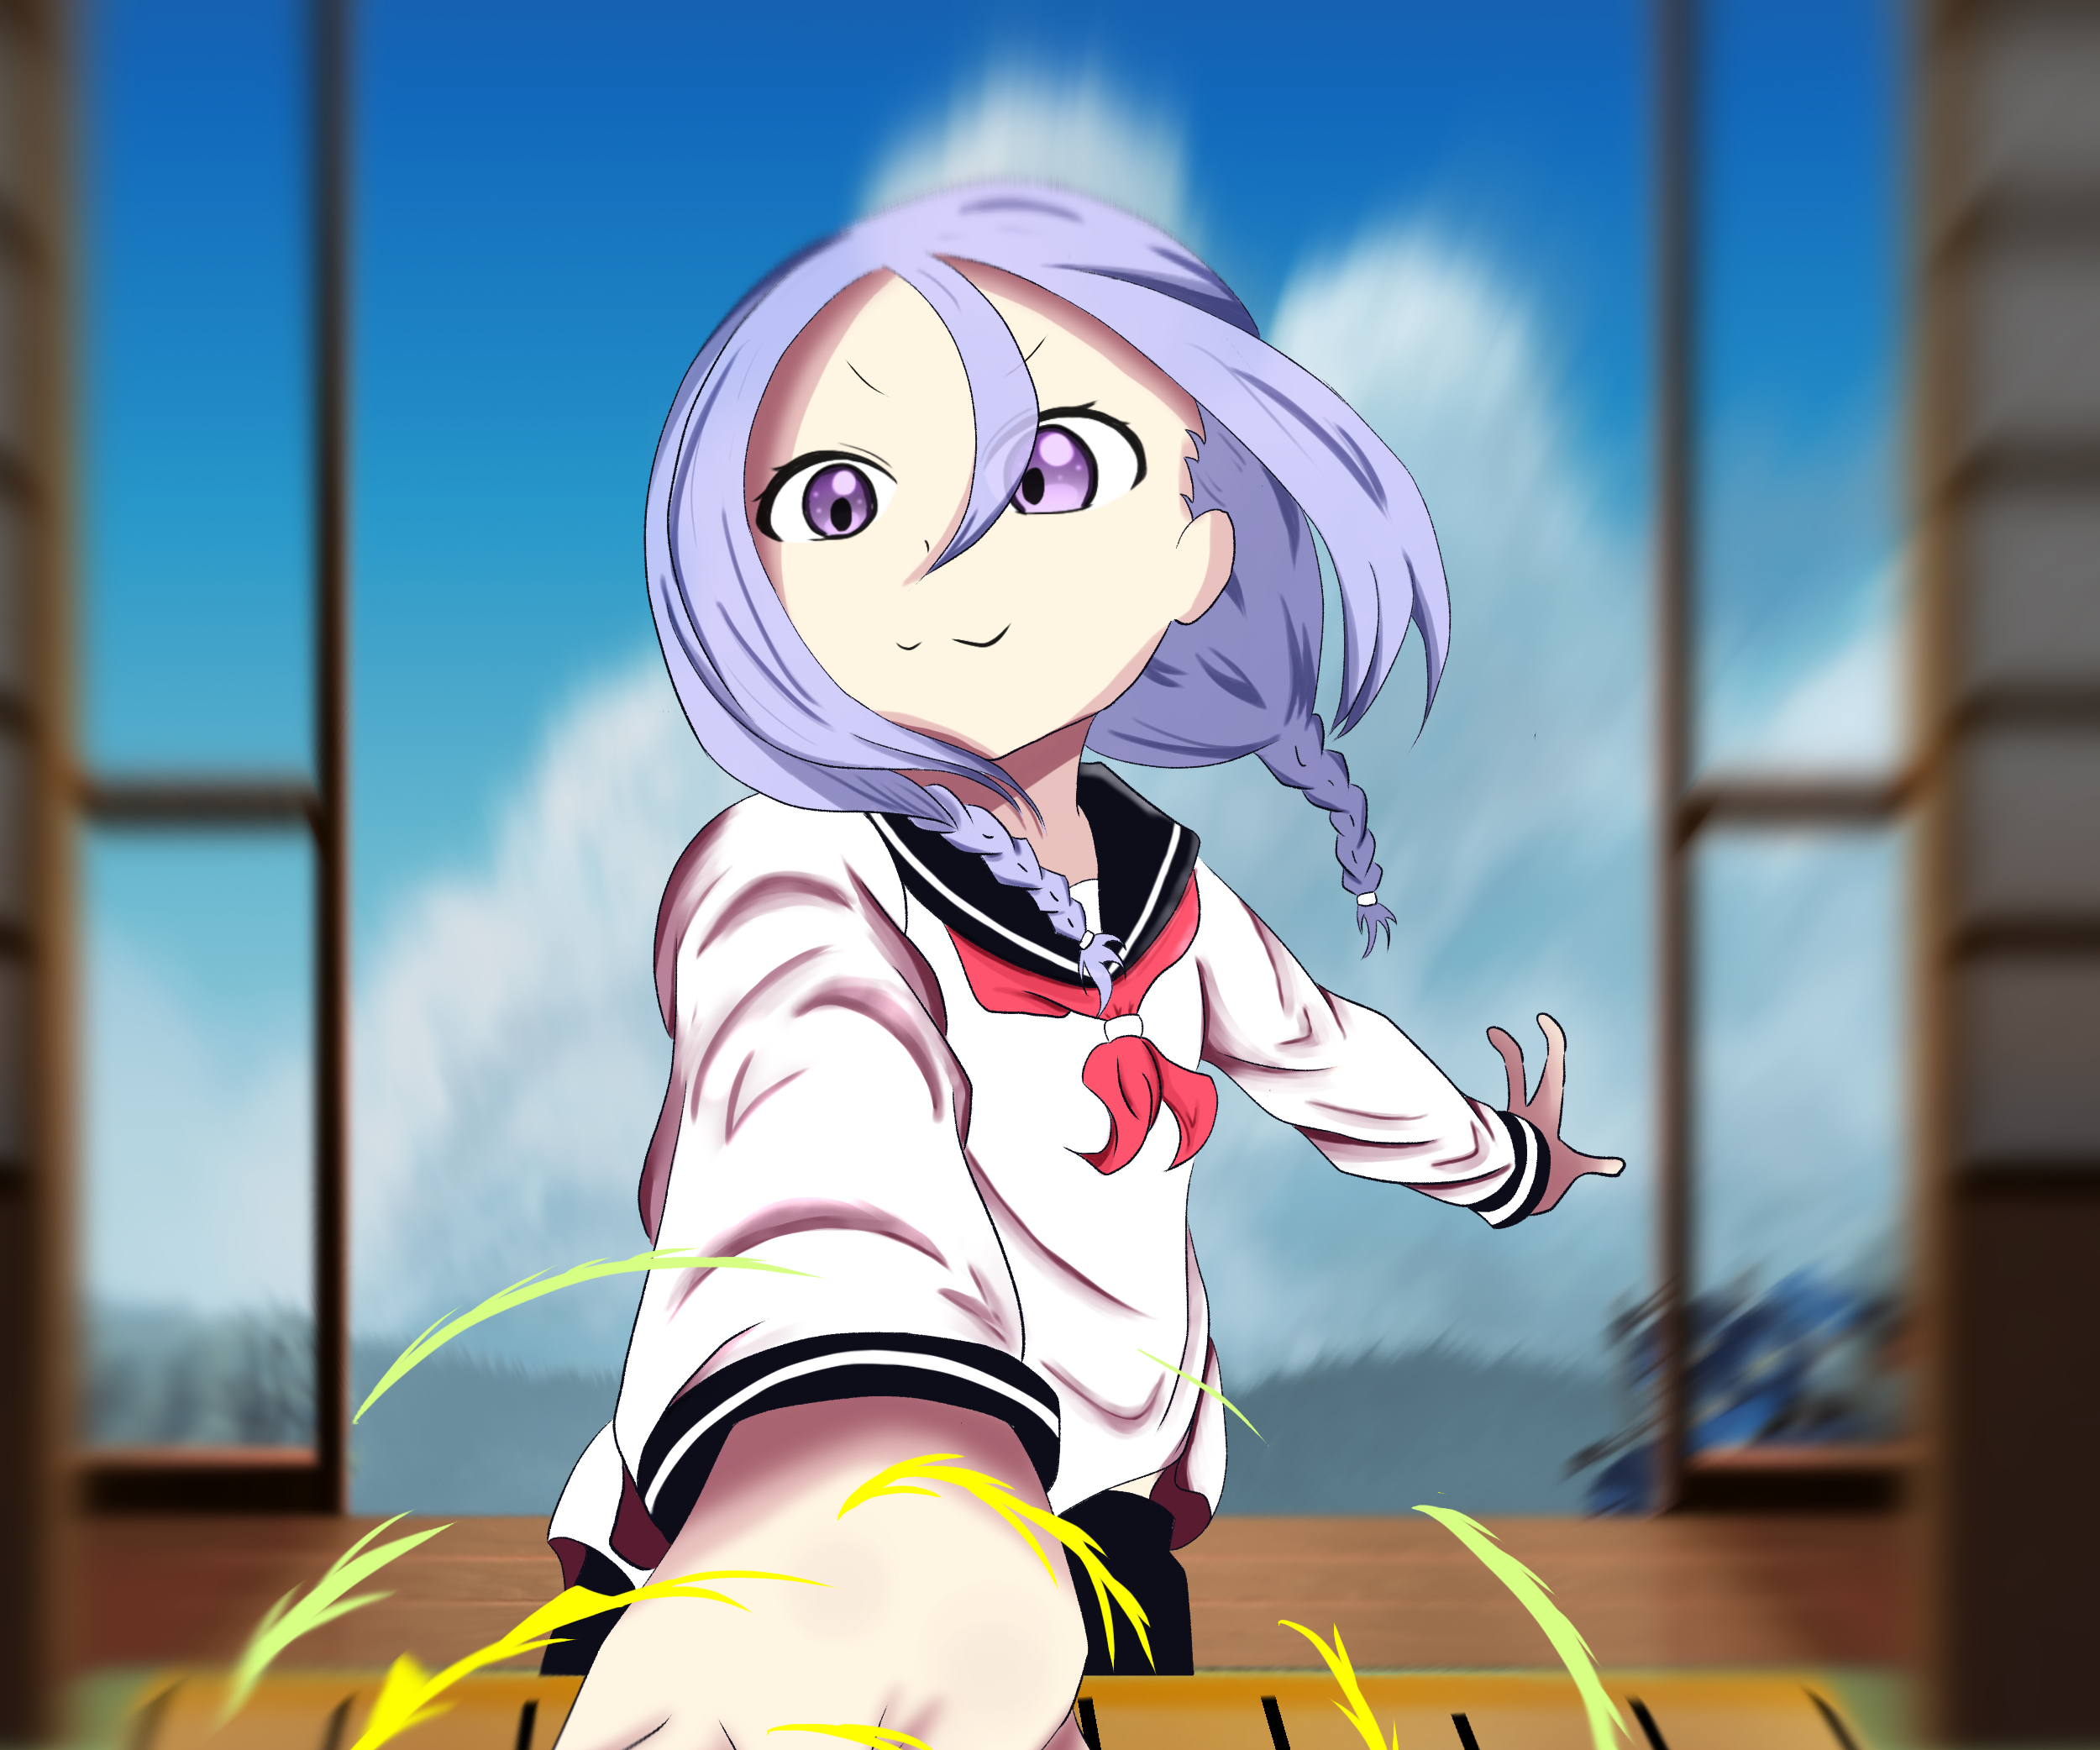 Anime When Will Ayumu Make His Move? HD Wallpaper | Background Image